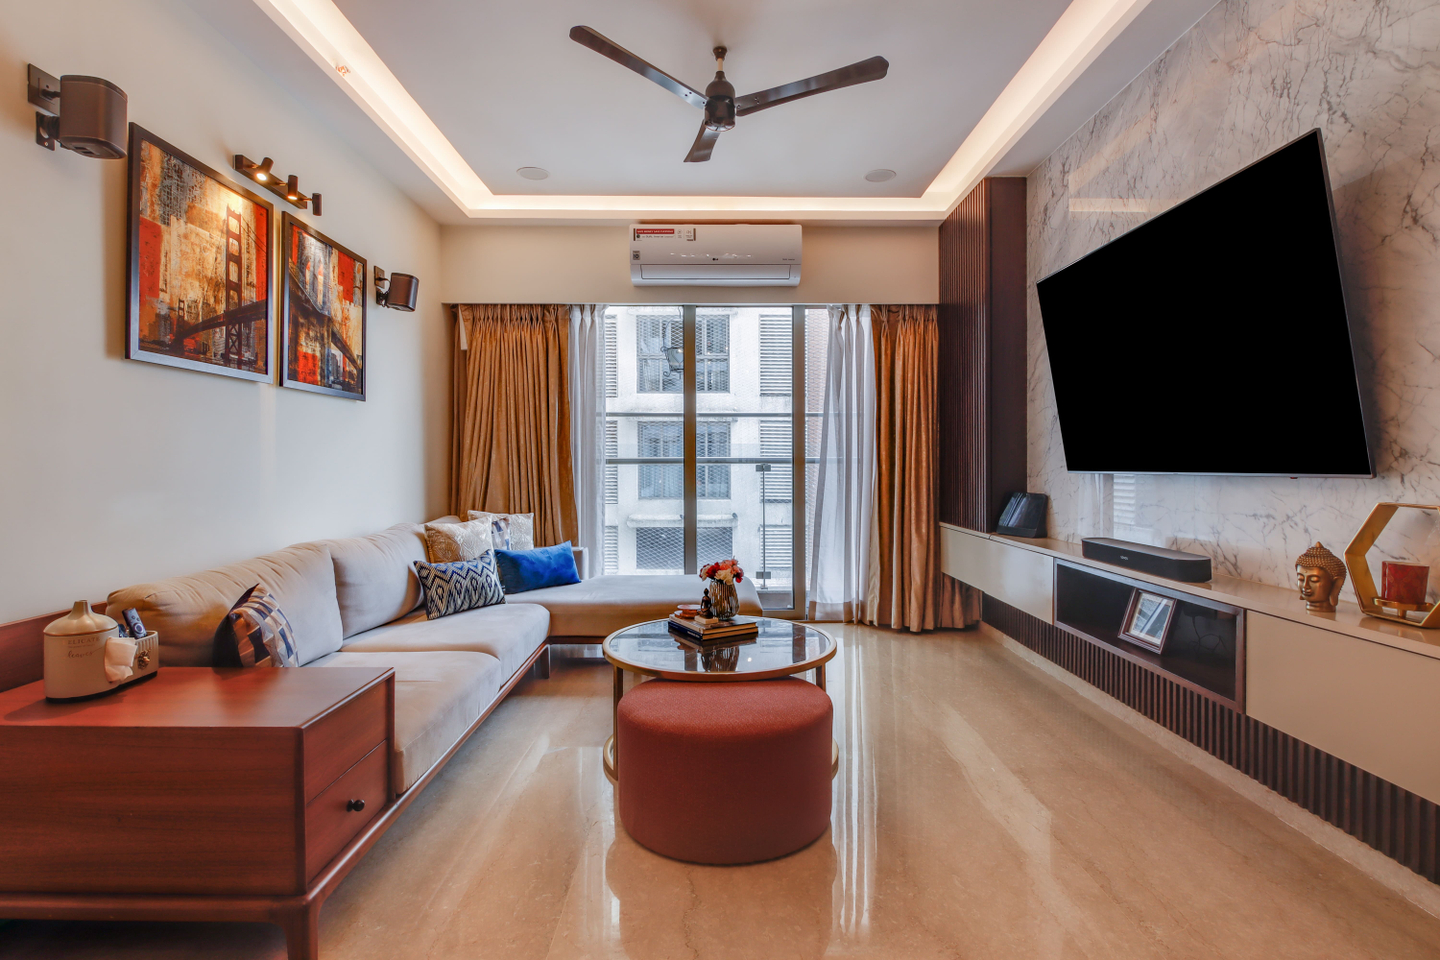 Transitional Mumbai House Design - Livspace